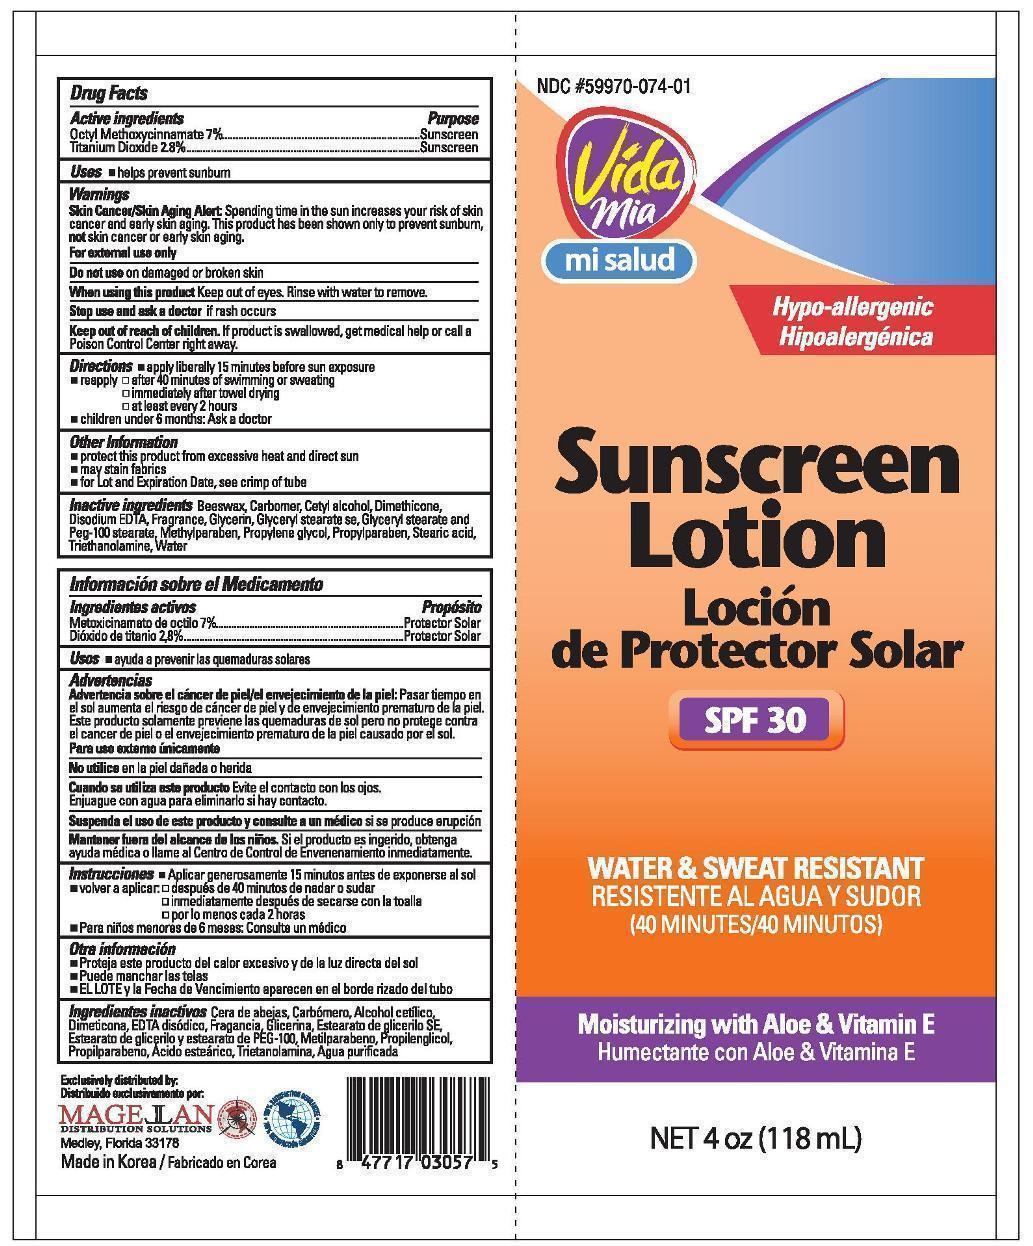 image of sunscreen tube